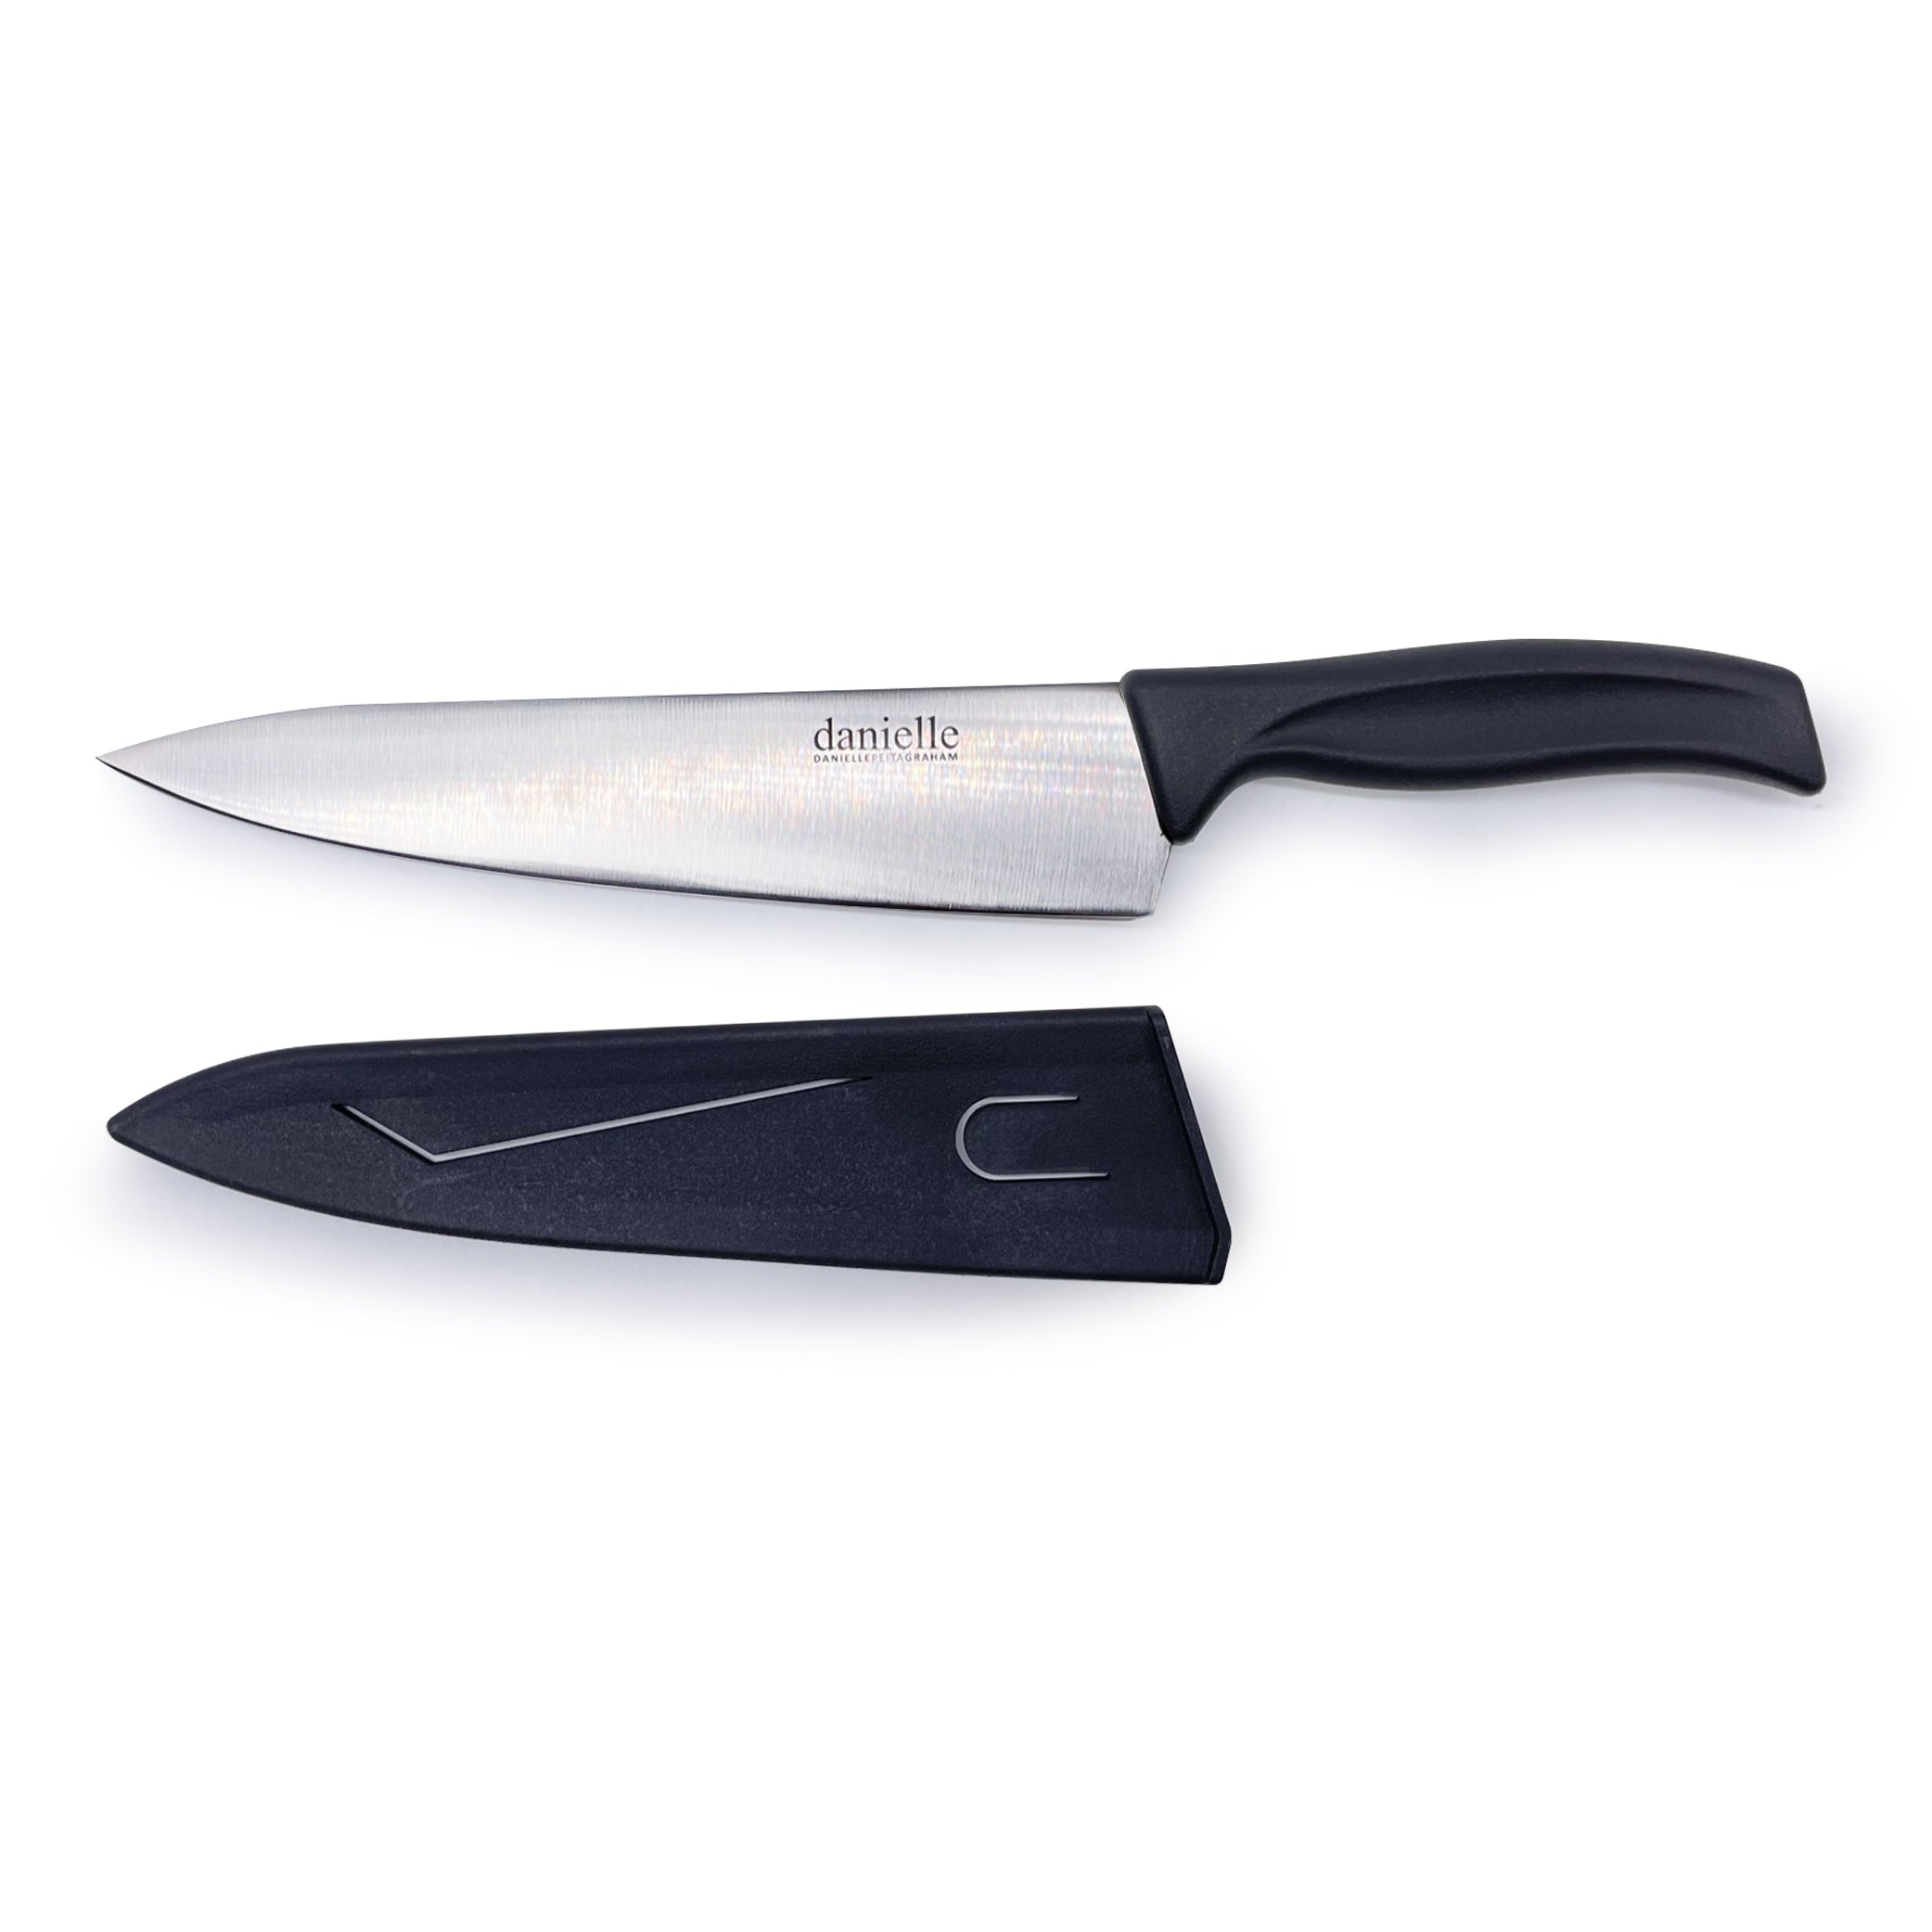 Initial 8” Chef Knife(20 cm)-Black